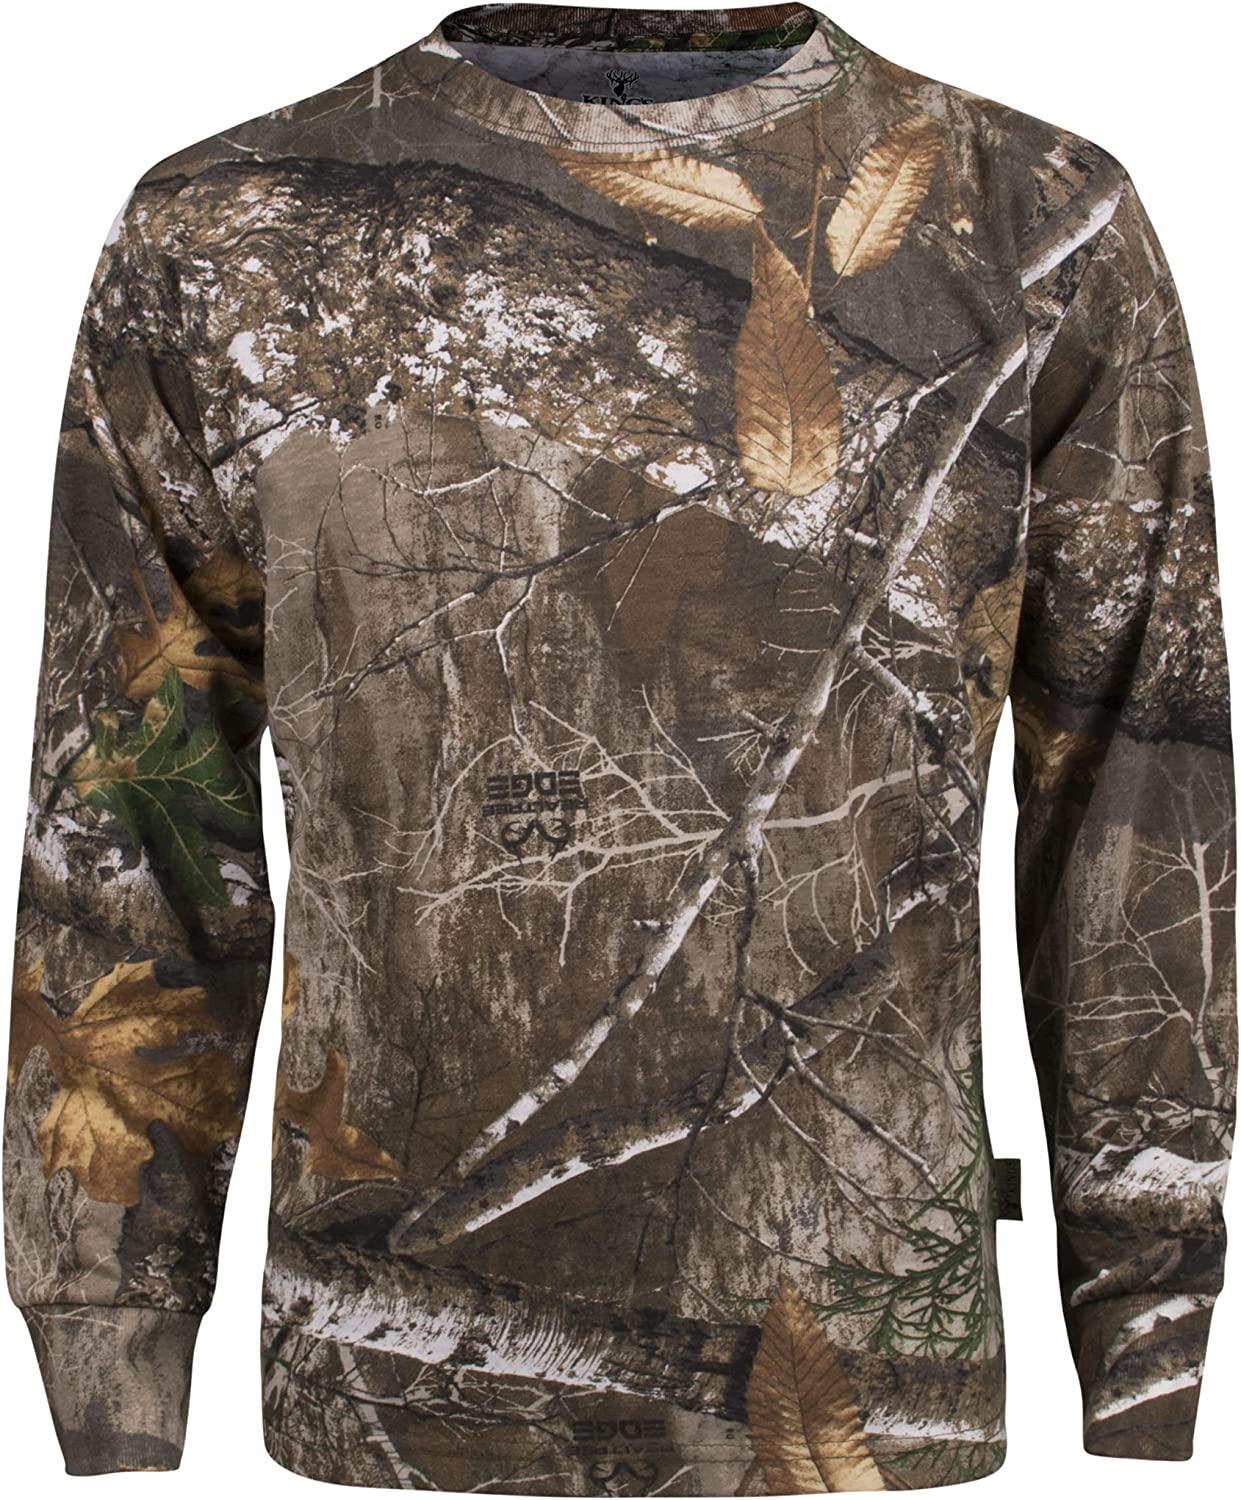  SCENTBLOCKER Scent Blocker Fused Cotton Lightweight  Short-Sleeve Camo Hunting Shirt for Men (MO Country DNA, Medium) : Sports &  Outdoors